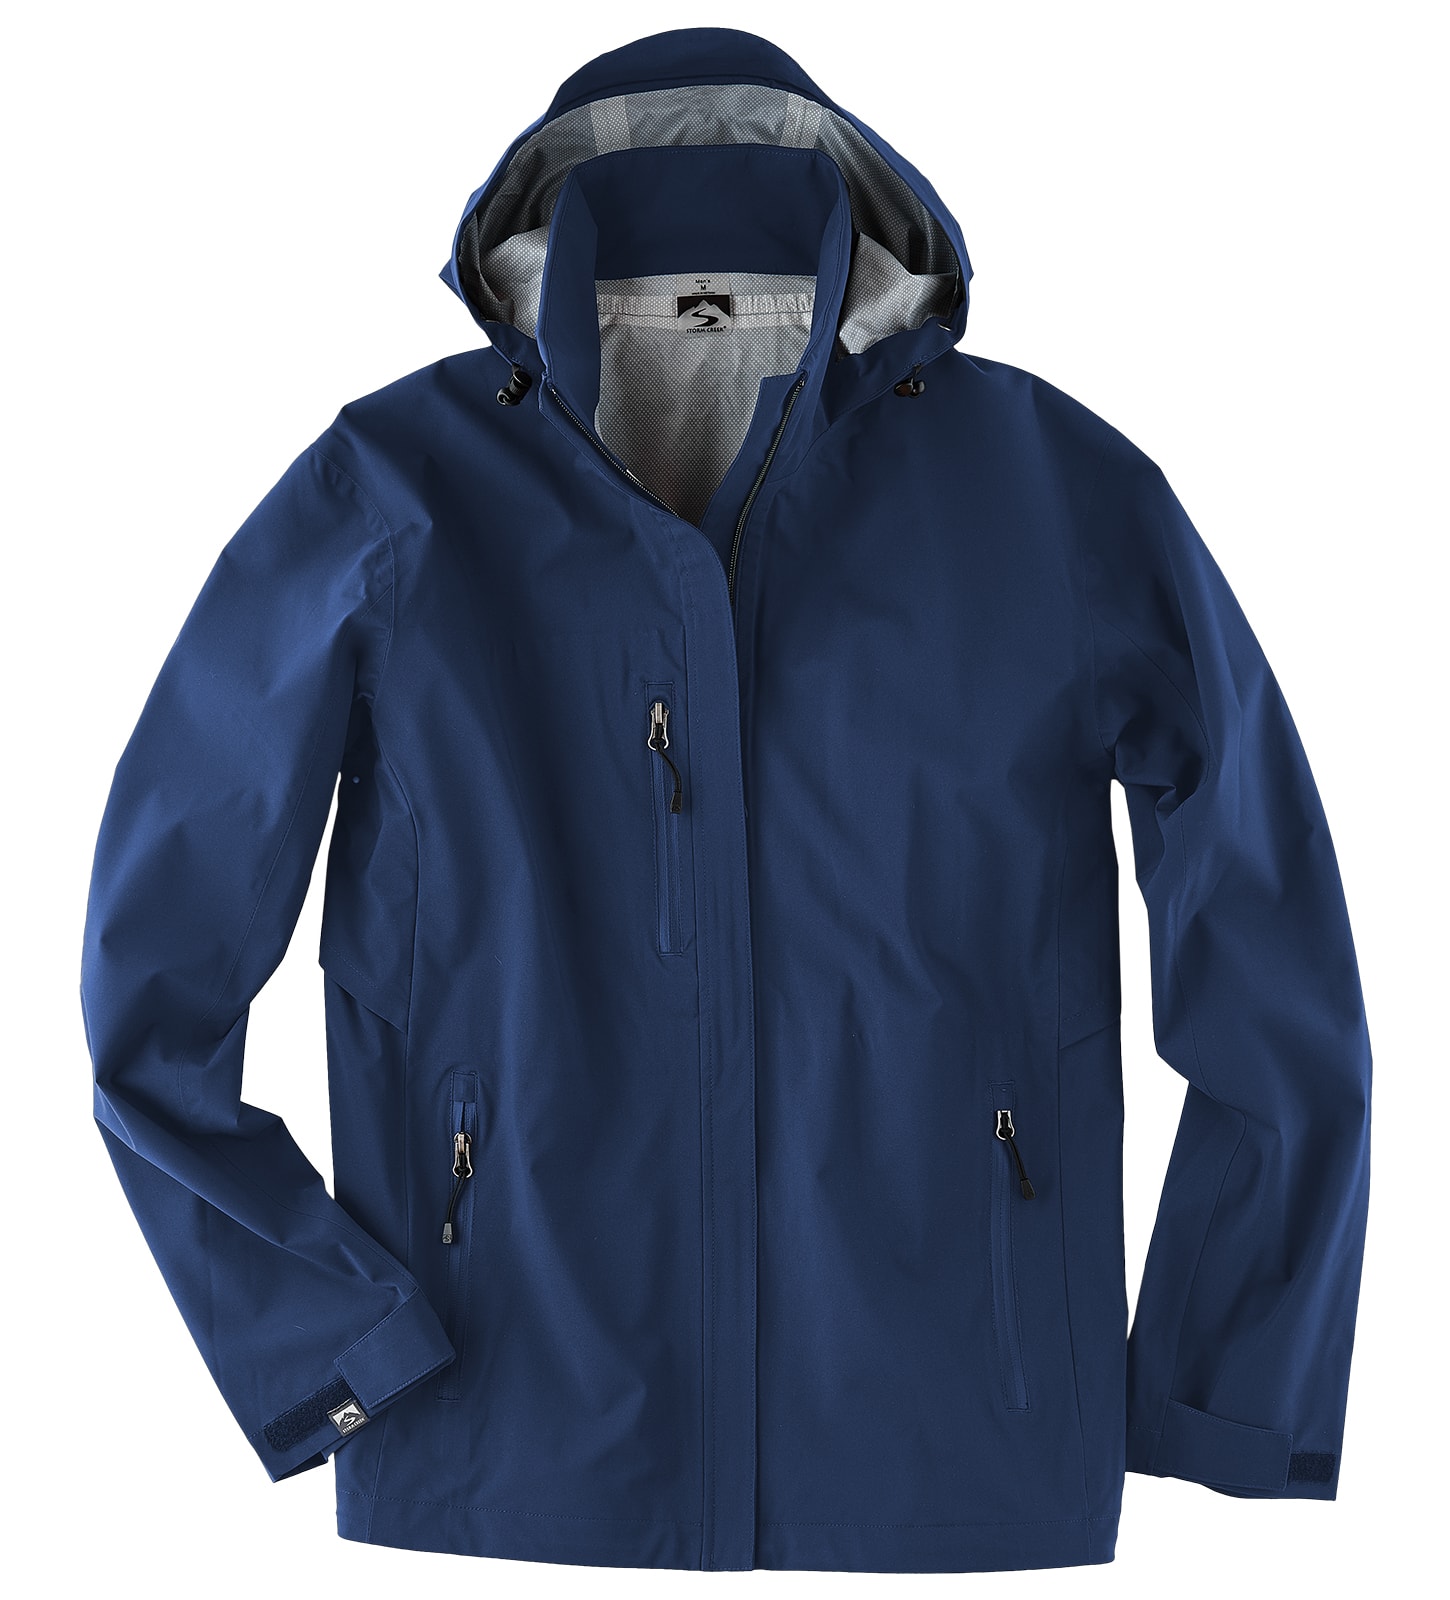 Storm Creek 6520 - Men's Explorer Waterproof Breathable Rain Jacket